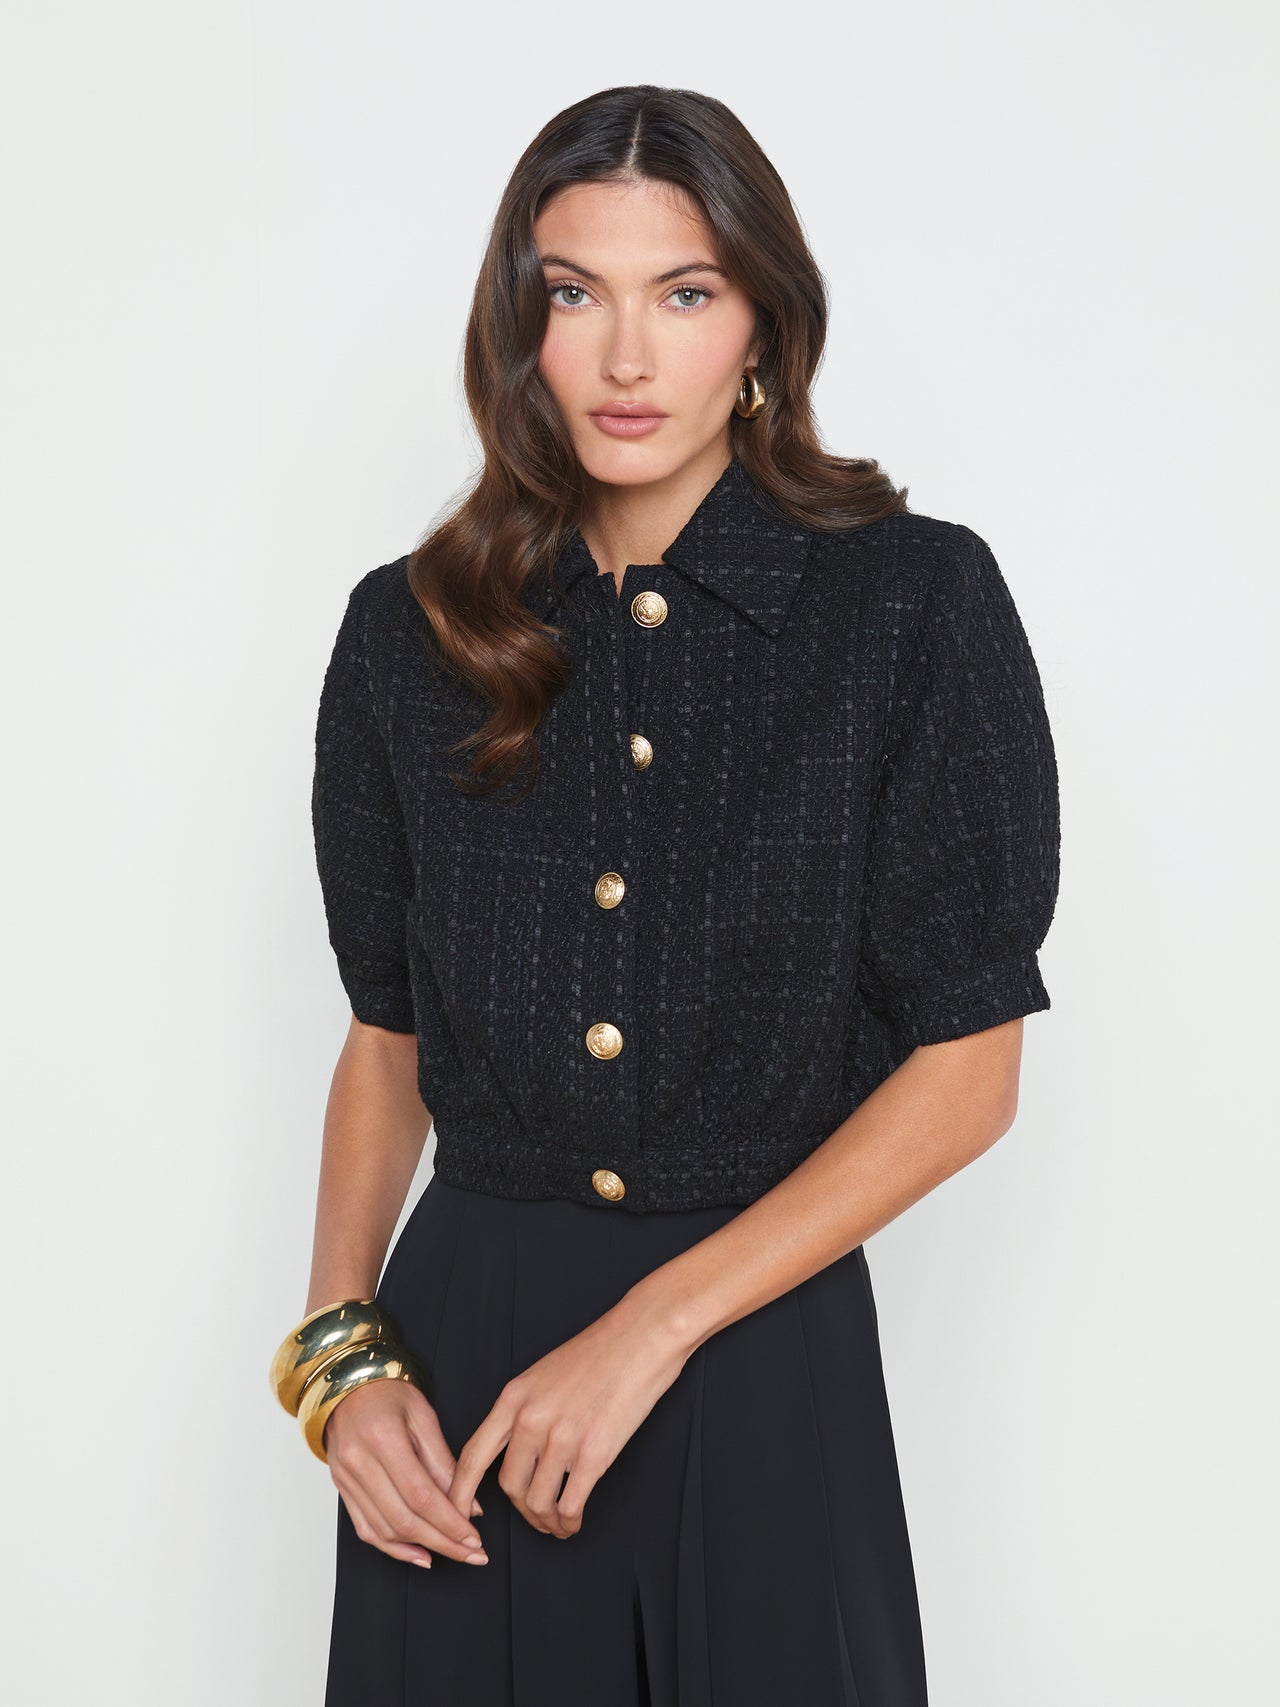 Women's Jackets & Blazers | L'AGENCE